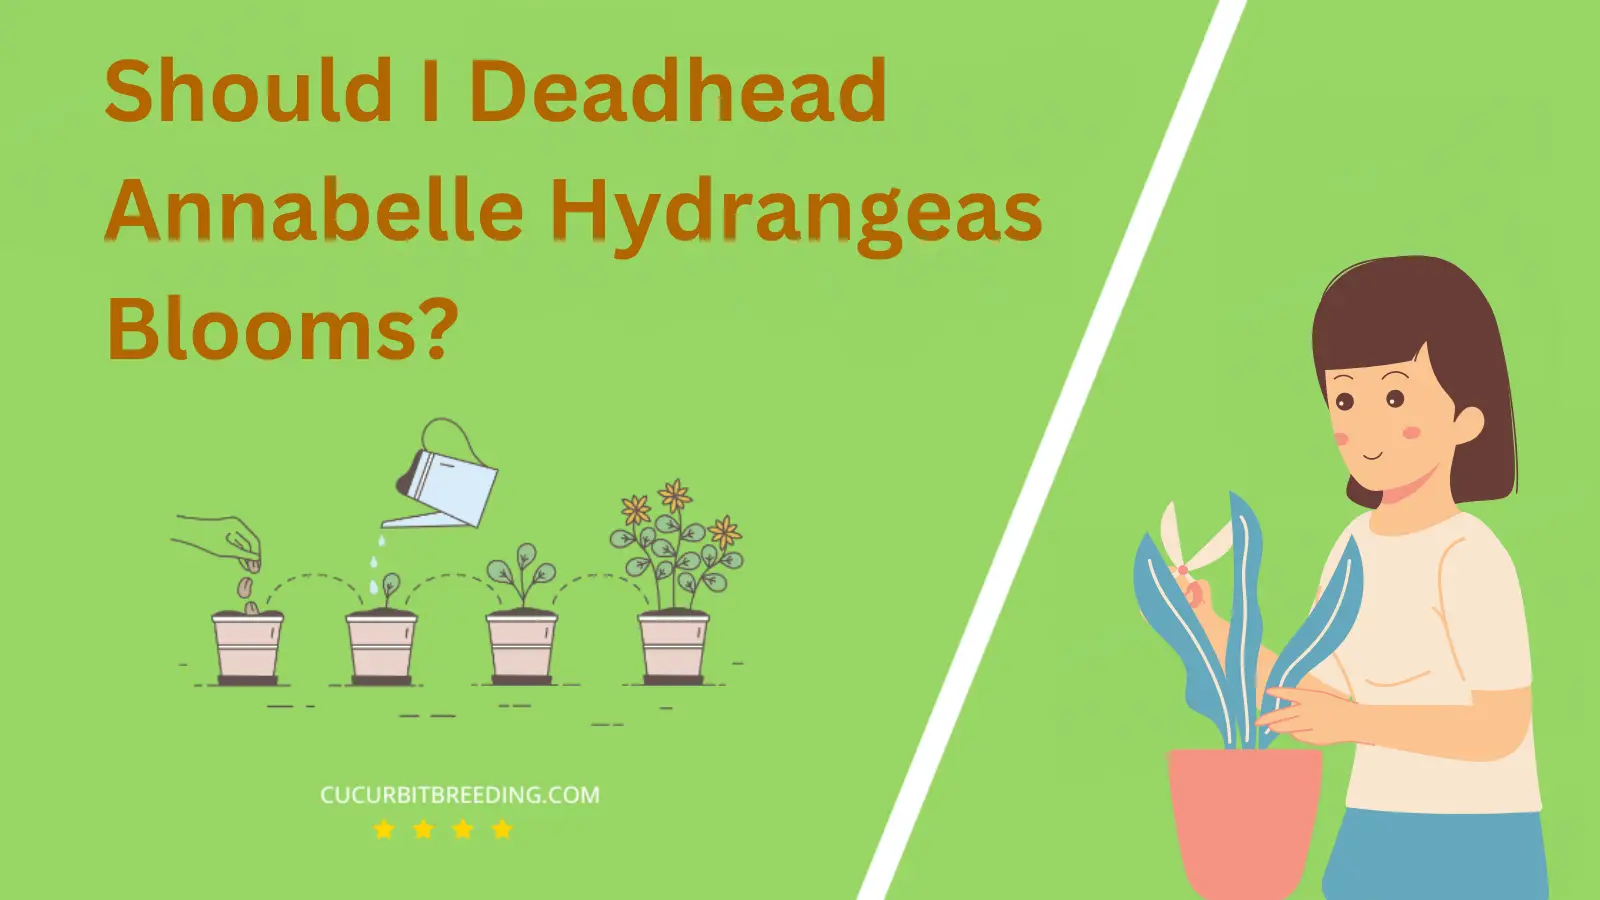 Should I Deadhead Annabelle Hydrangeas Blooms?